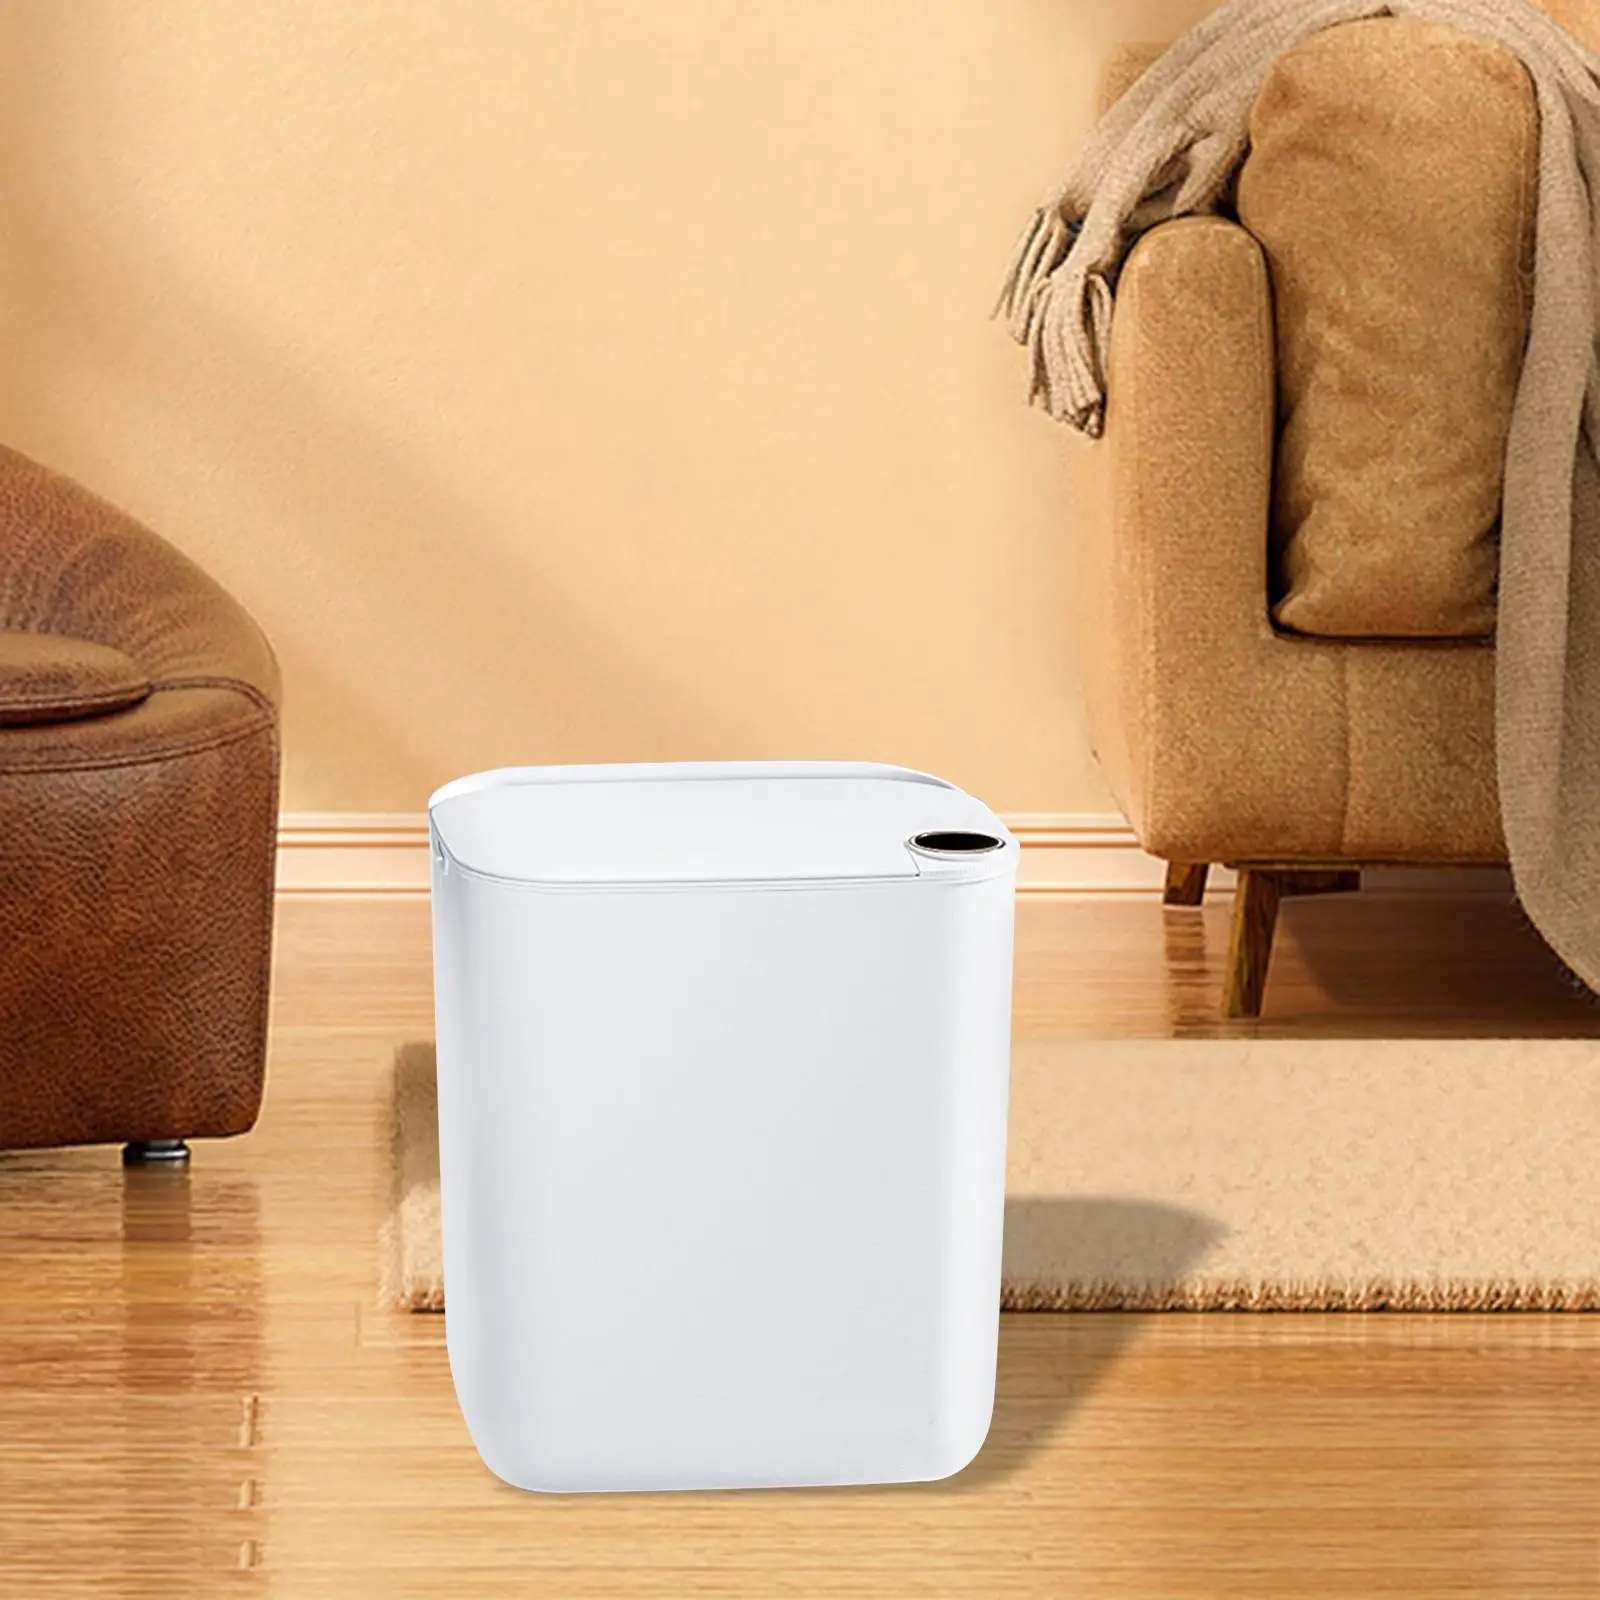 Automatic Sensor Trash Can Touchless Trash Bin for Home Living Room Bathroom